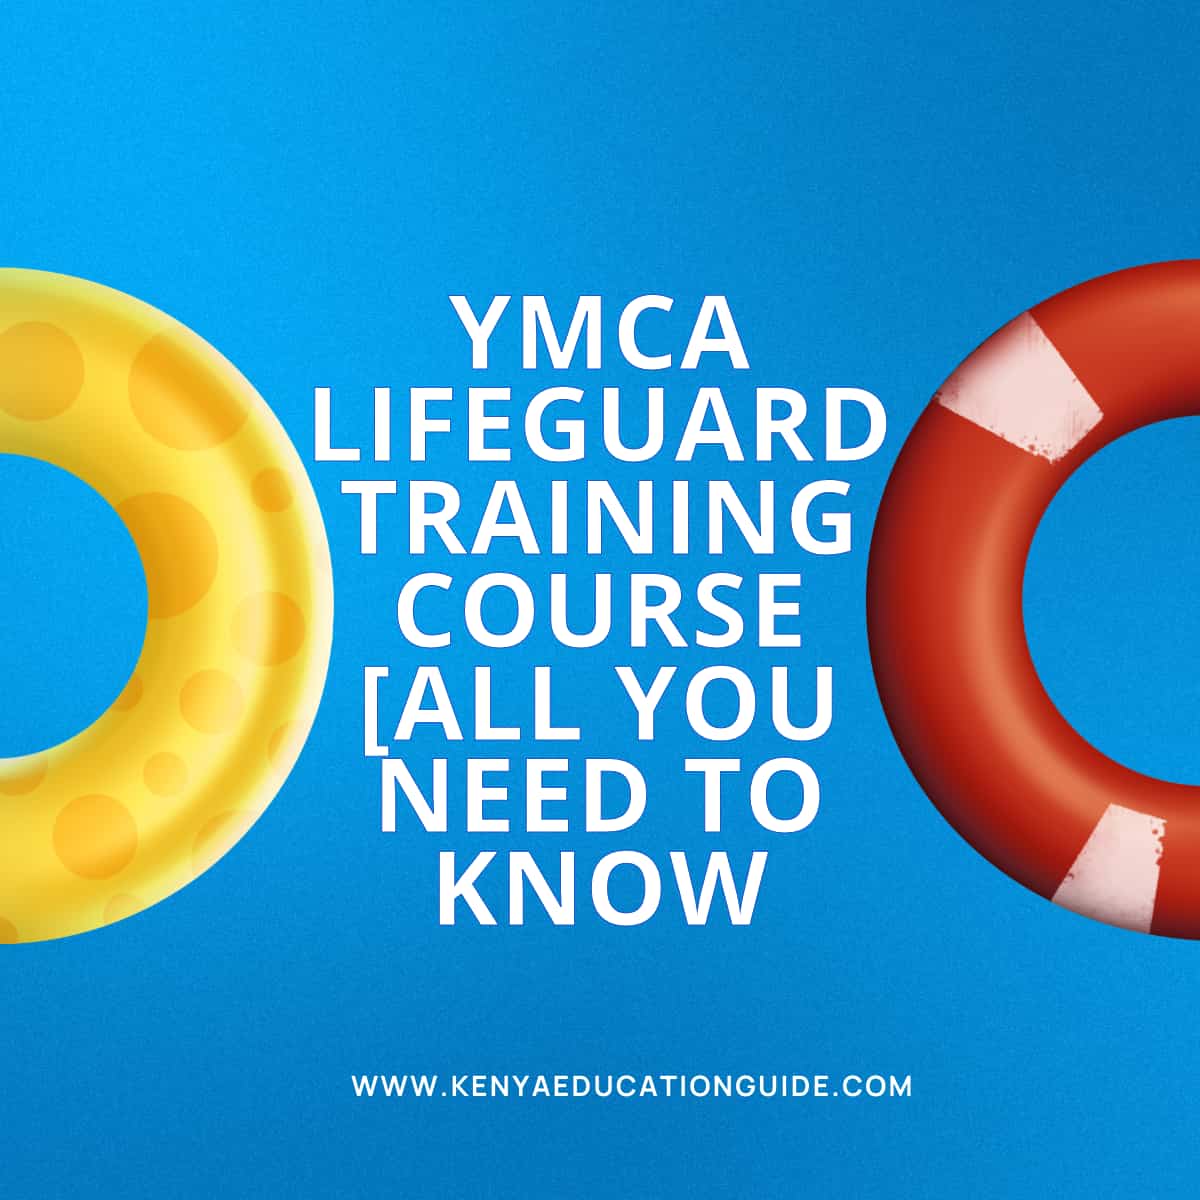 YMCA Lifeguard Training Course